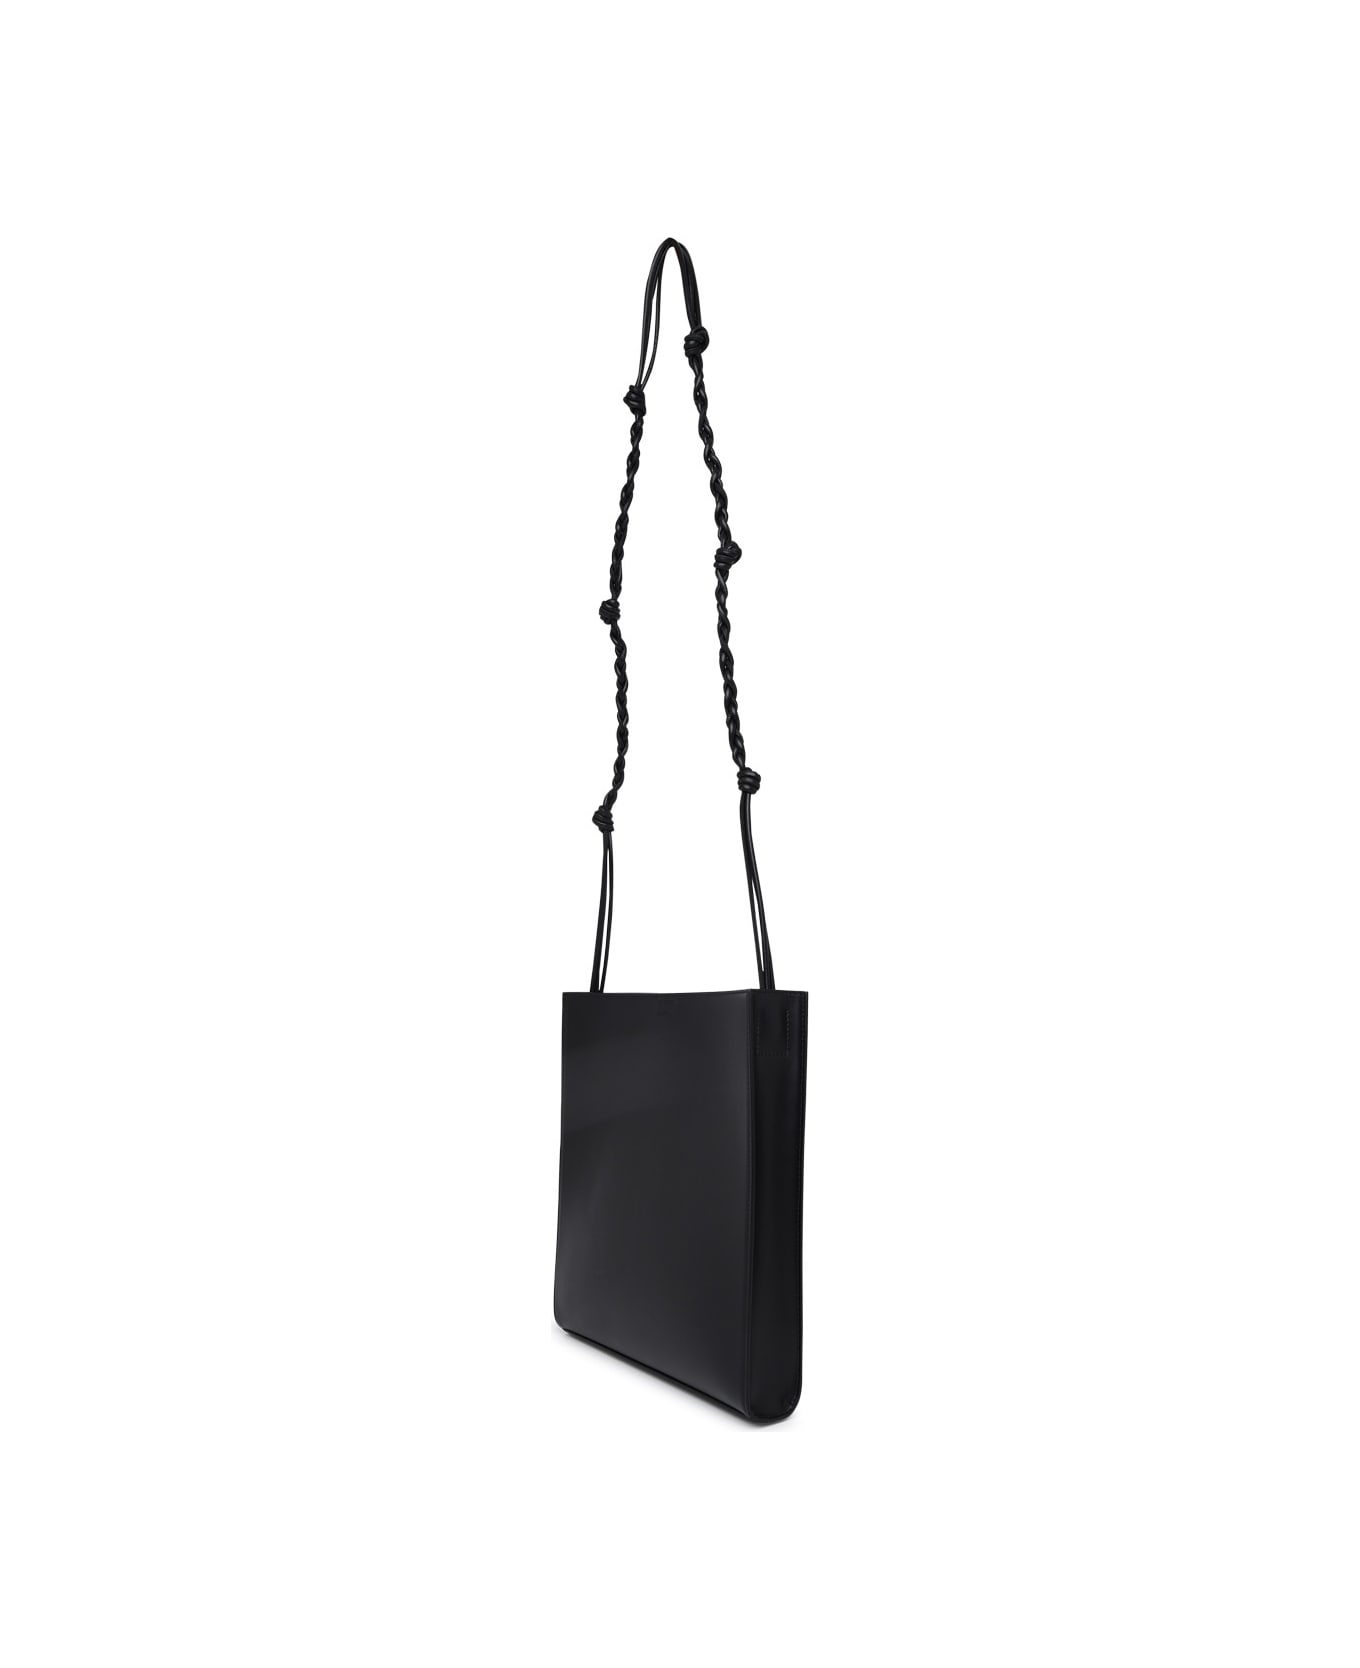 Jil Sander Medium Tangle Bag In Black Leather - Black ショルダーバッグ